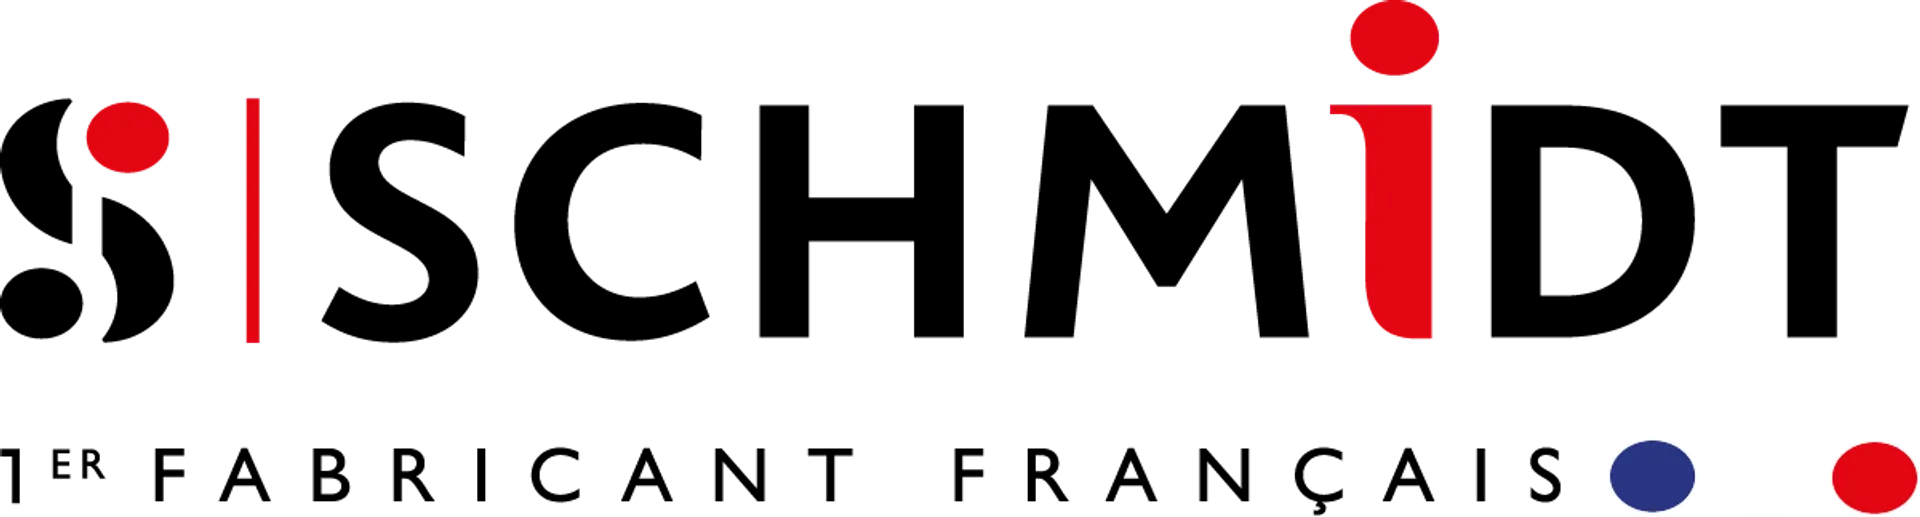 SCHMIDT logo du catalogue